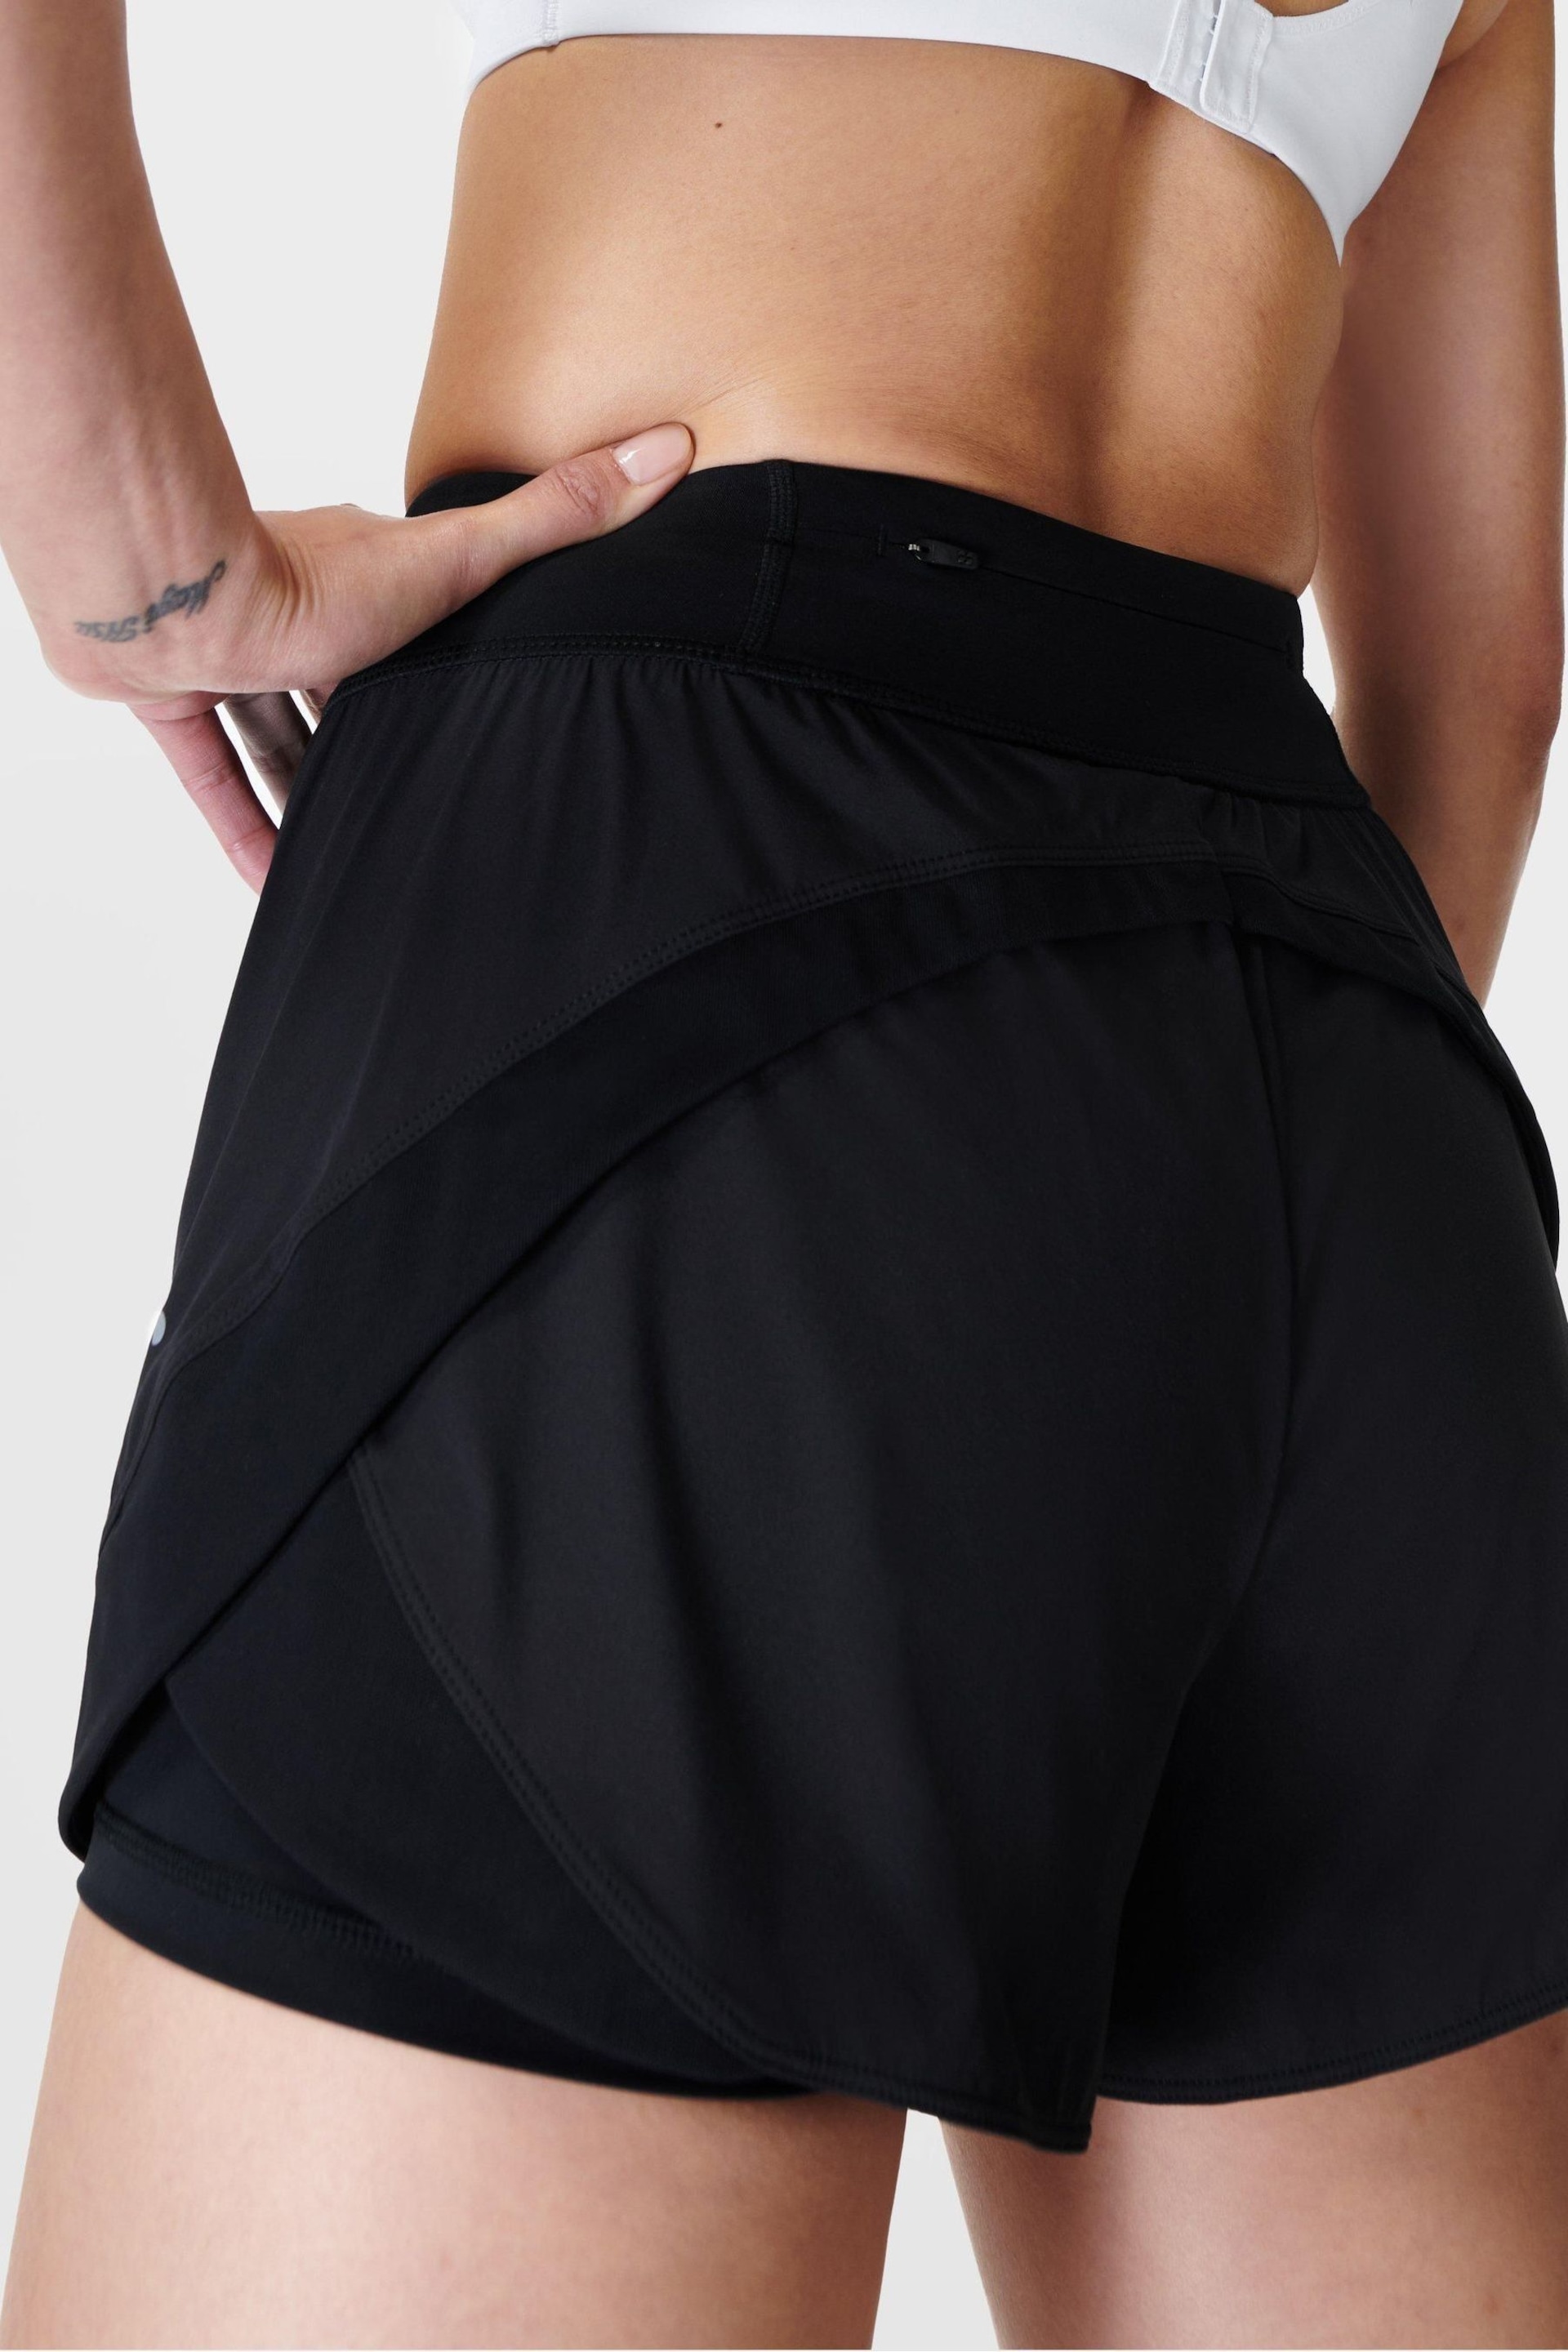 Sweaty Betty Black Tempo Run Shorts - Image 4 of 8